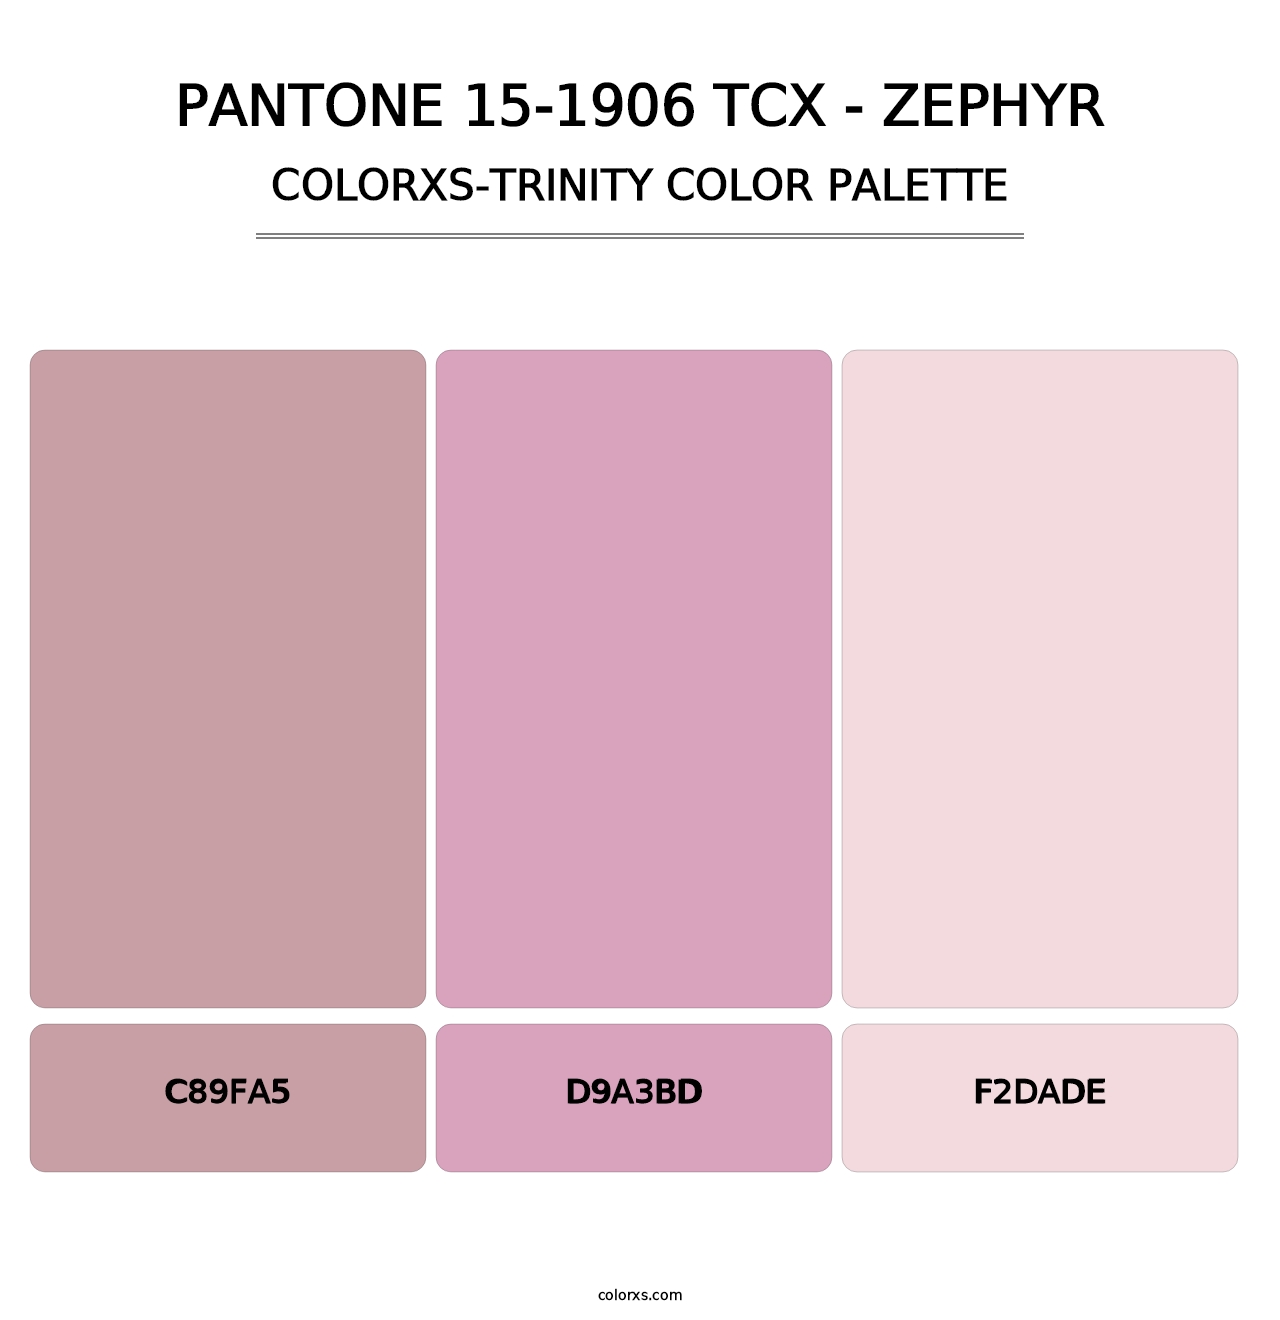 PANTONE 15-1906 TCX - Zephyr - Colorxs Trinity Palette